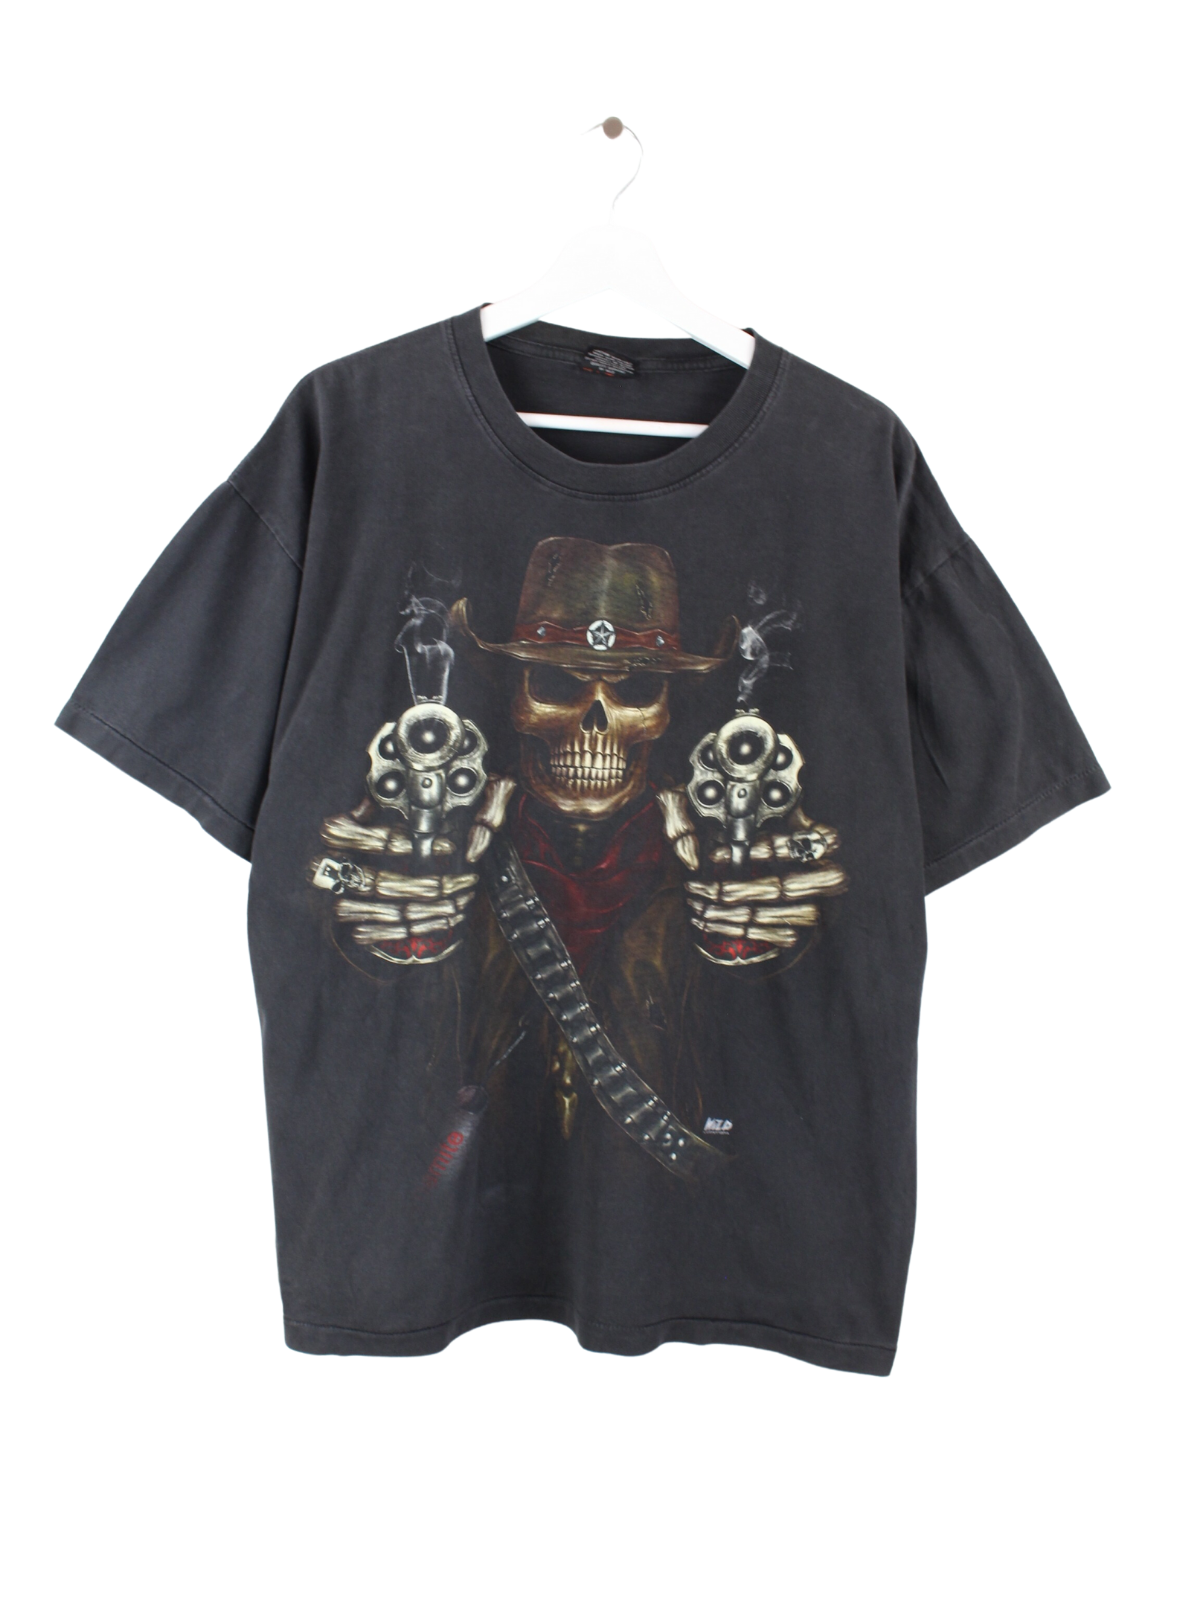 Vintage Skull Print T-Shirt Black XL